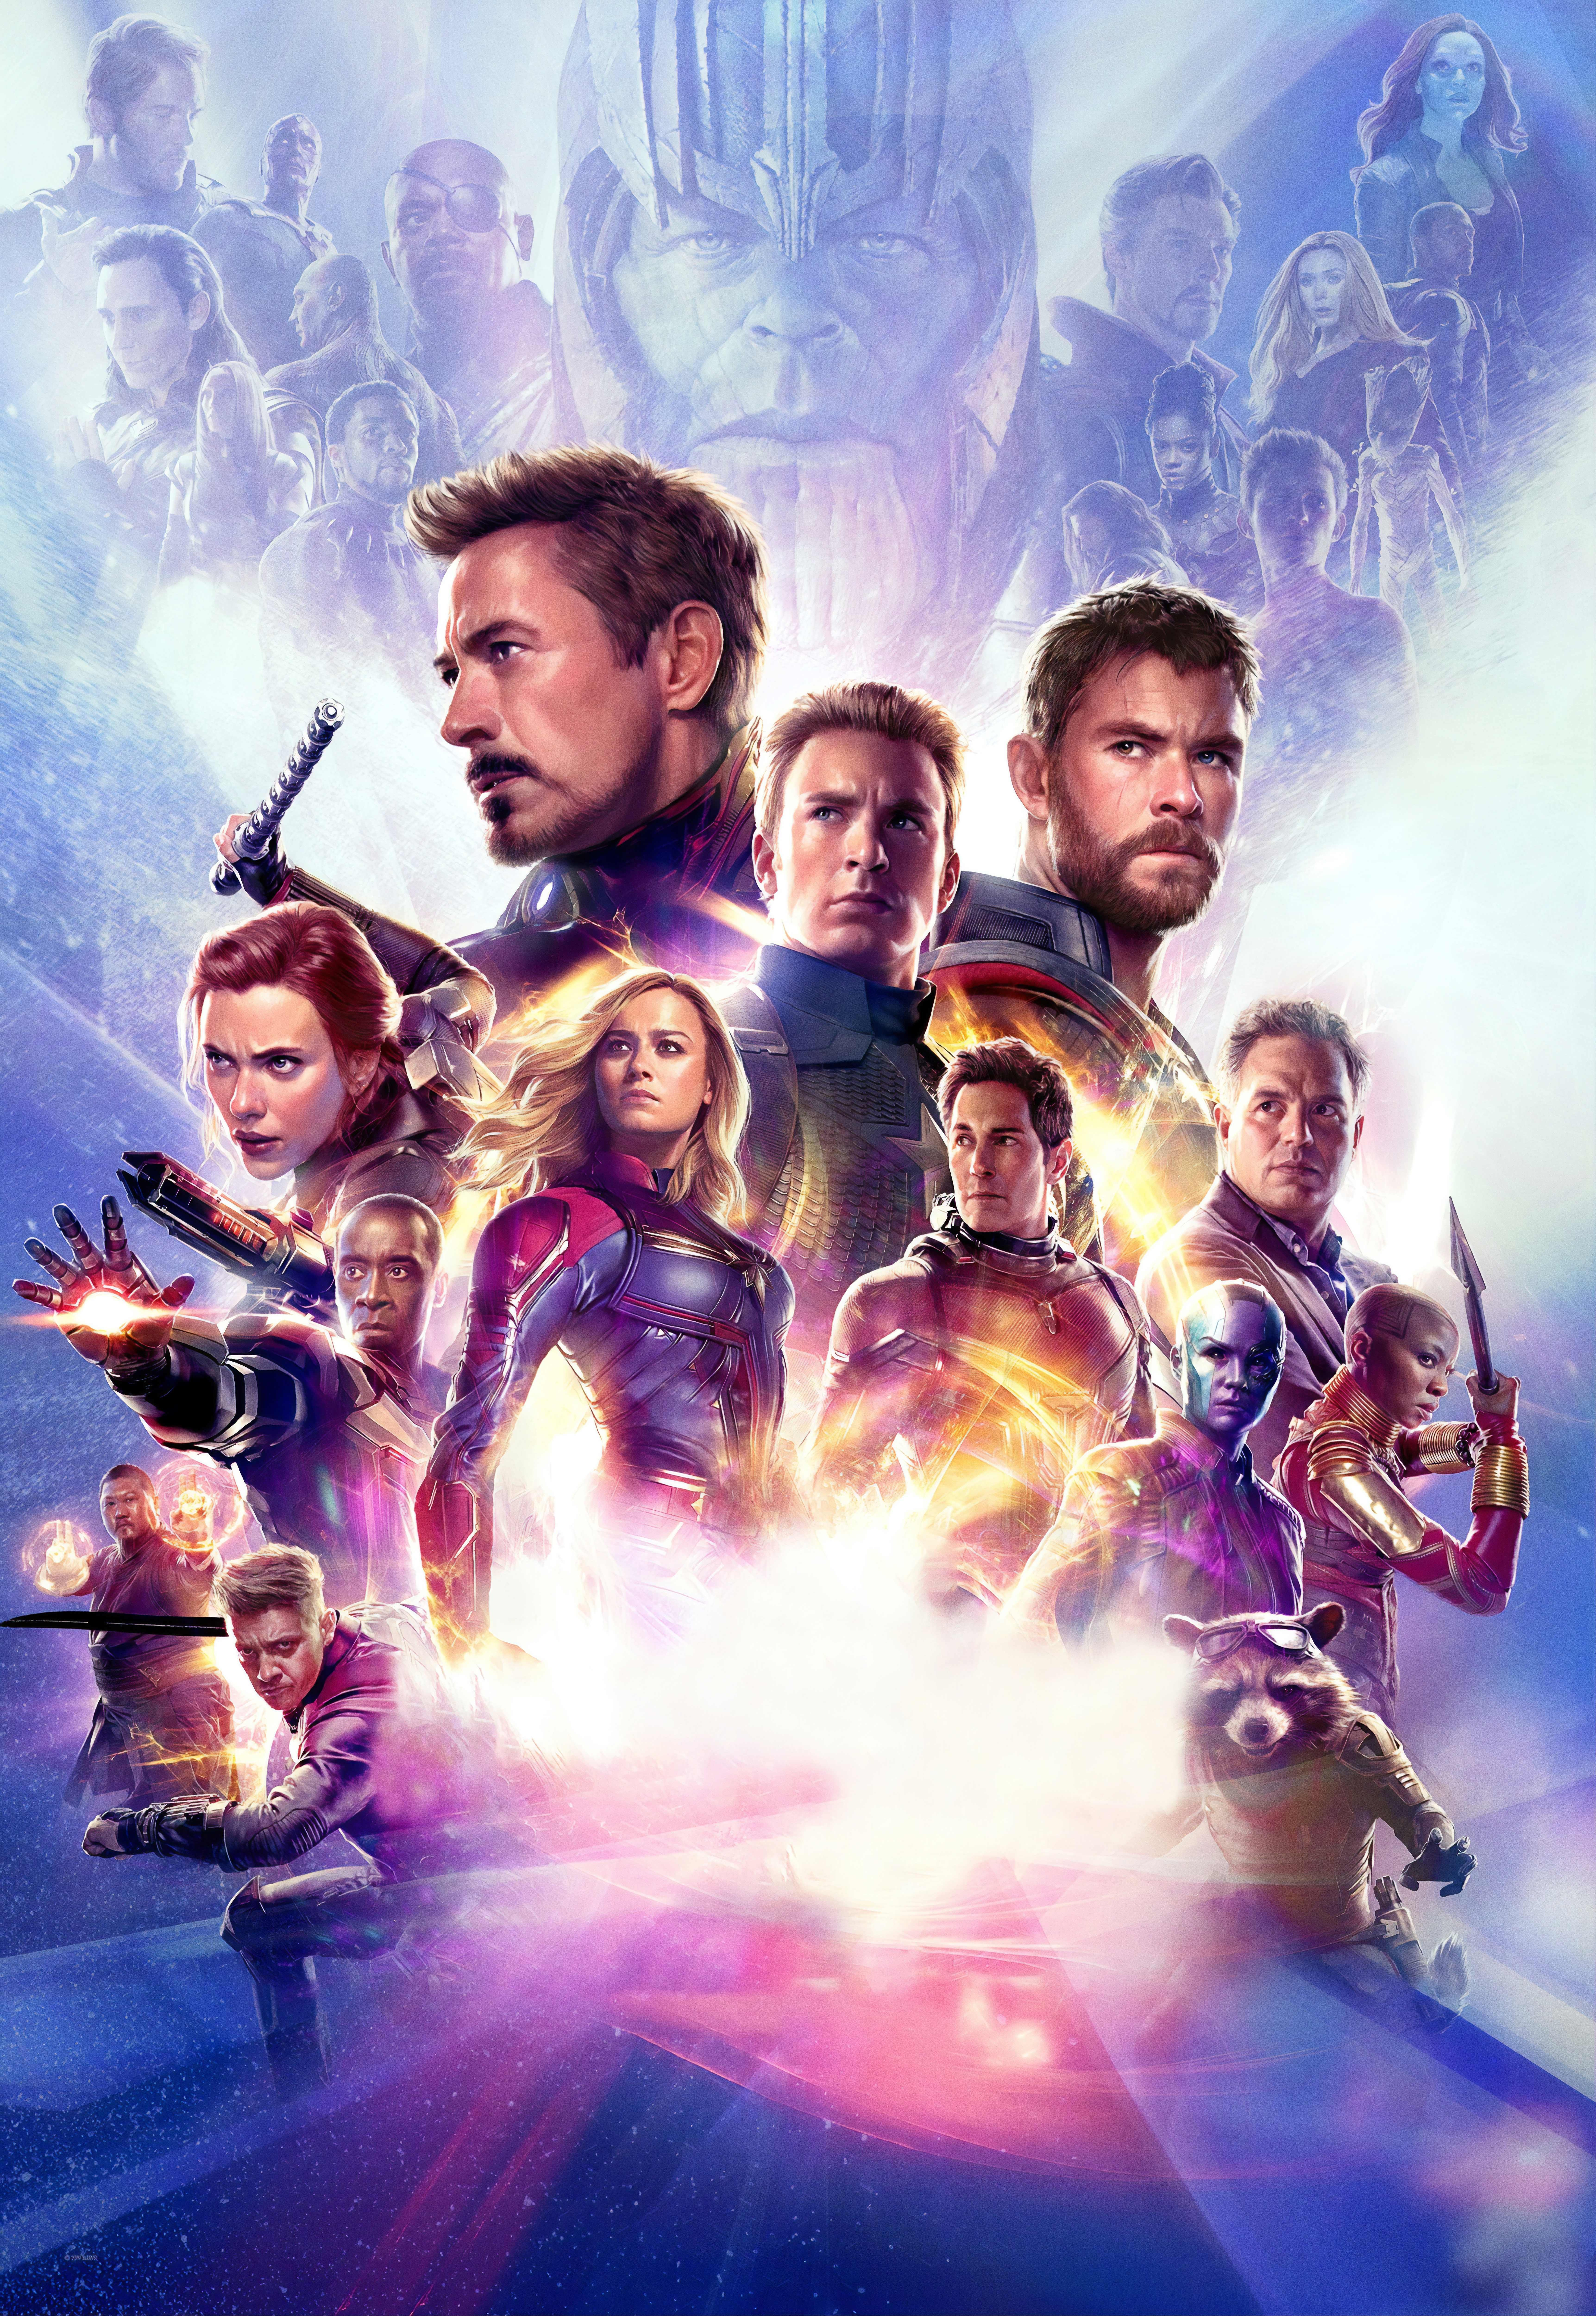 Avengers Endgame IMAX Poster Wallpaper, HD Movies 4K